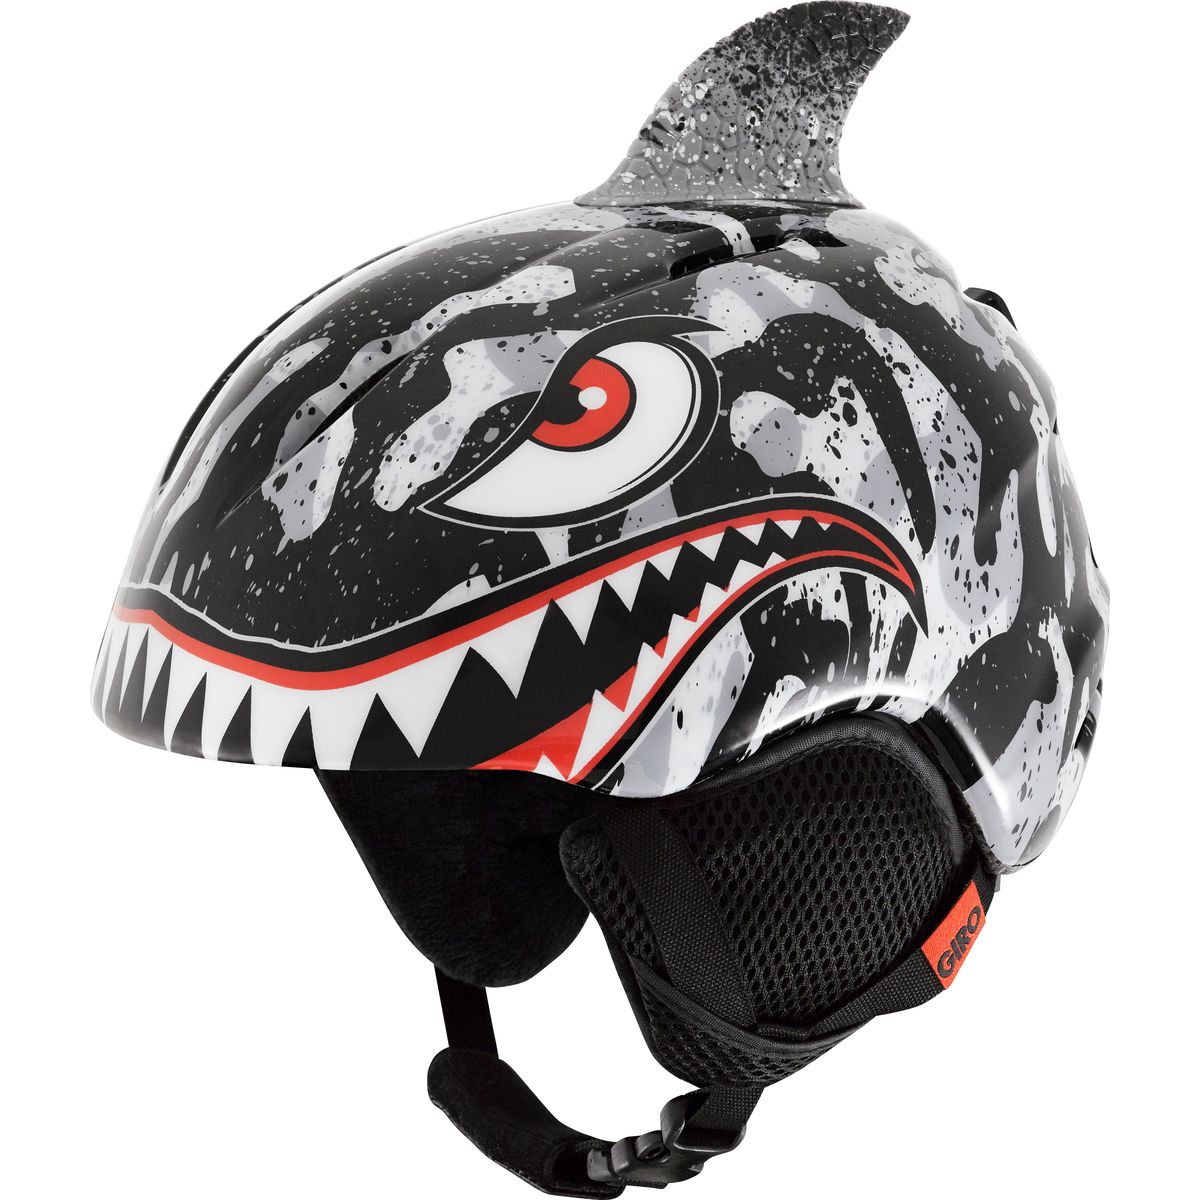 Giro Launch Plus Helmet - Kids' Black/Grey Tiger Shark